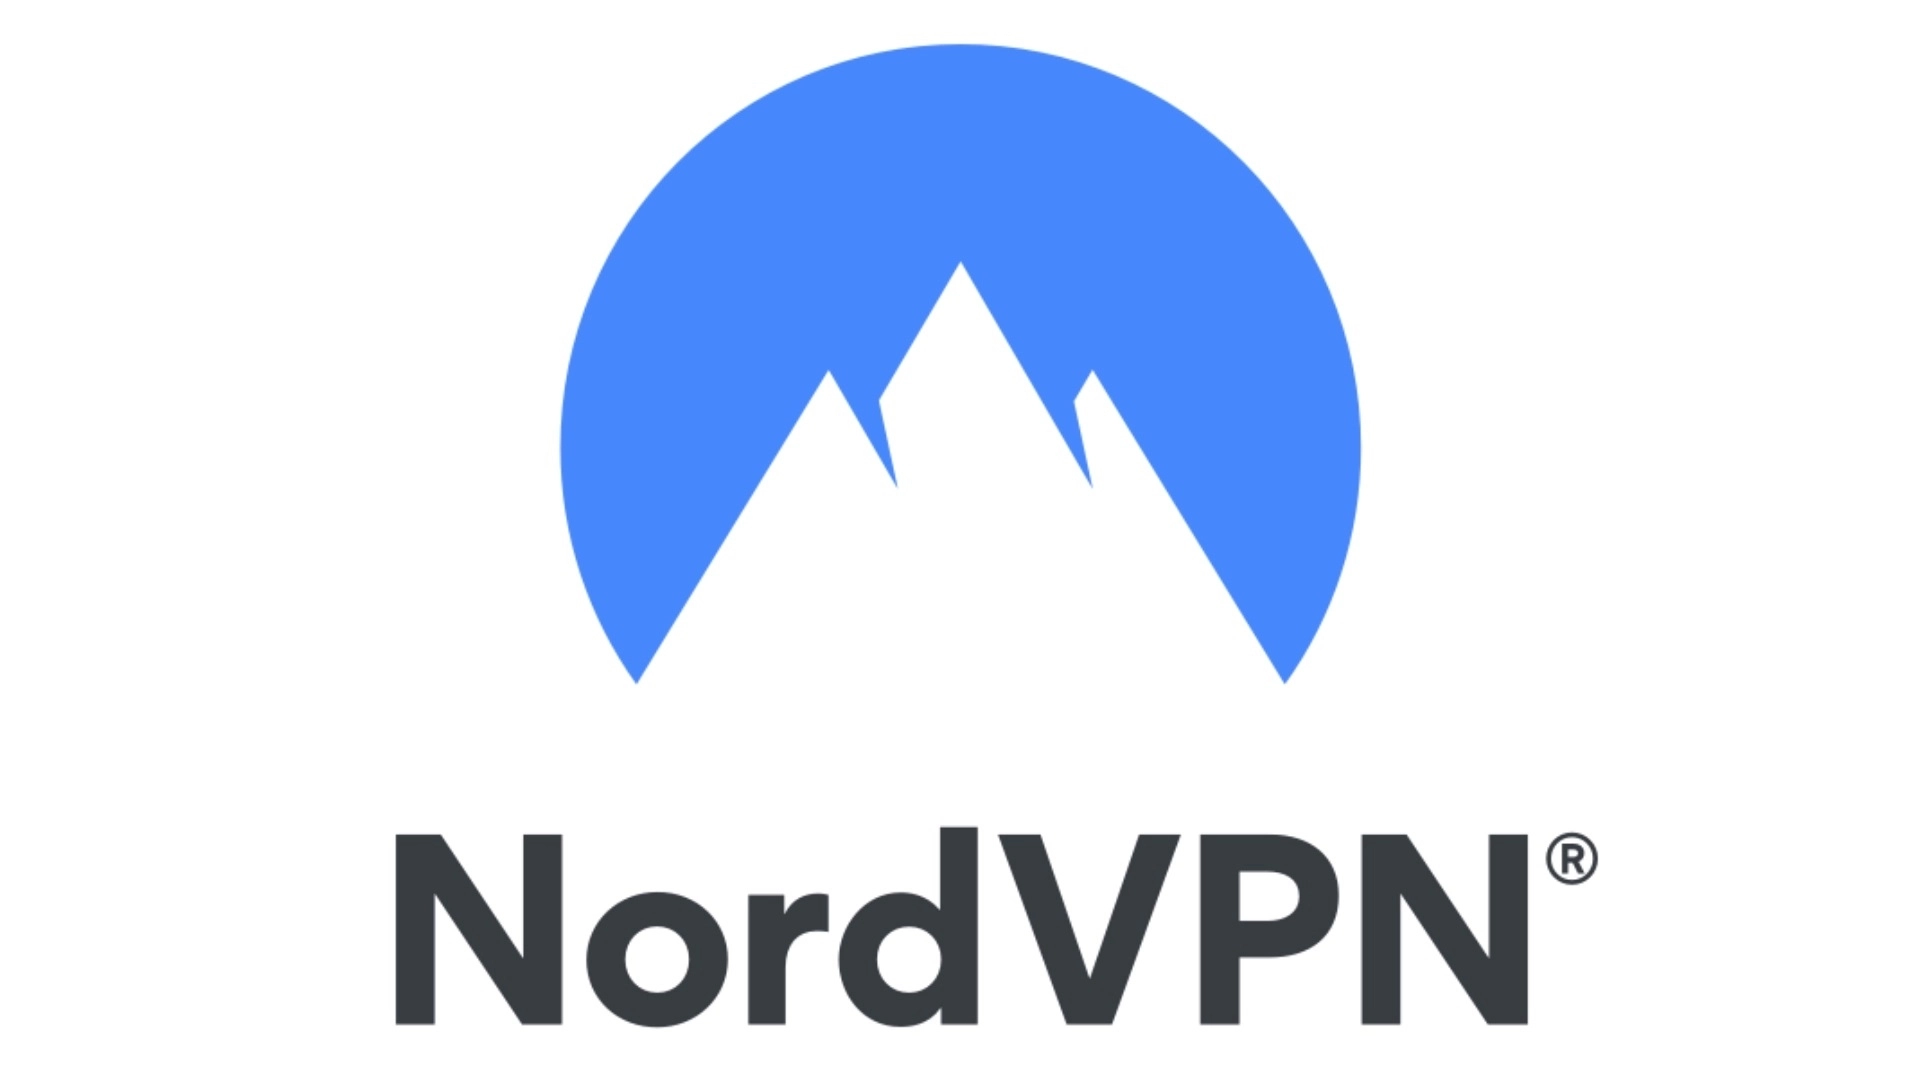 VPN servers for NordVPN. Image shows the company logo.